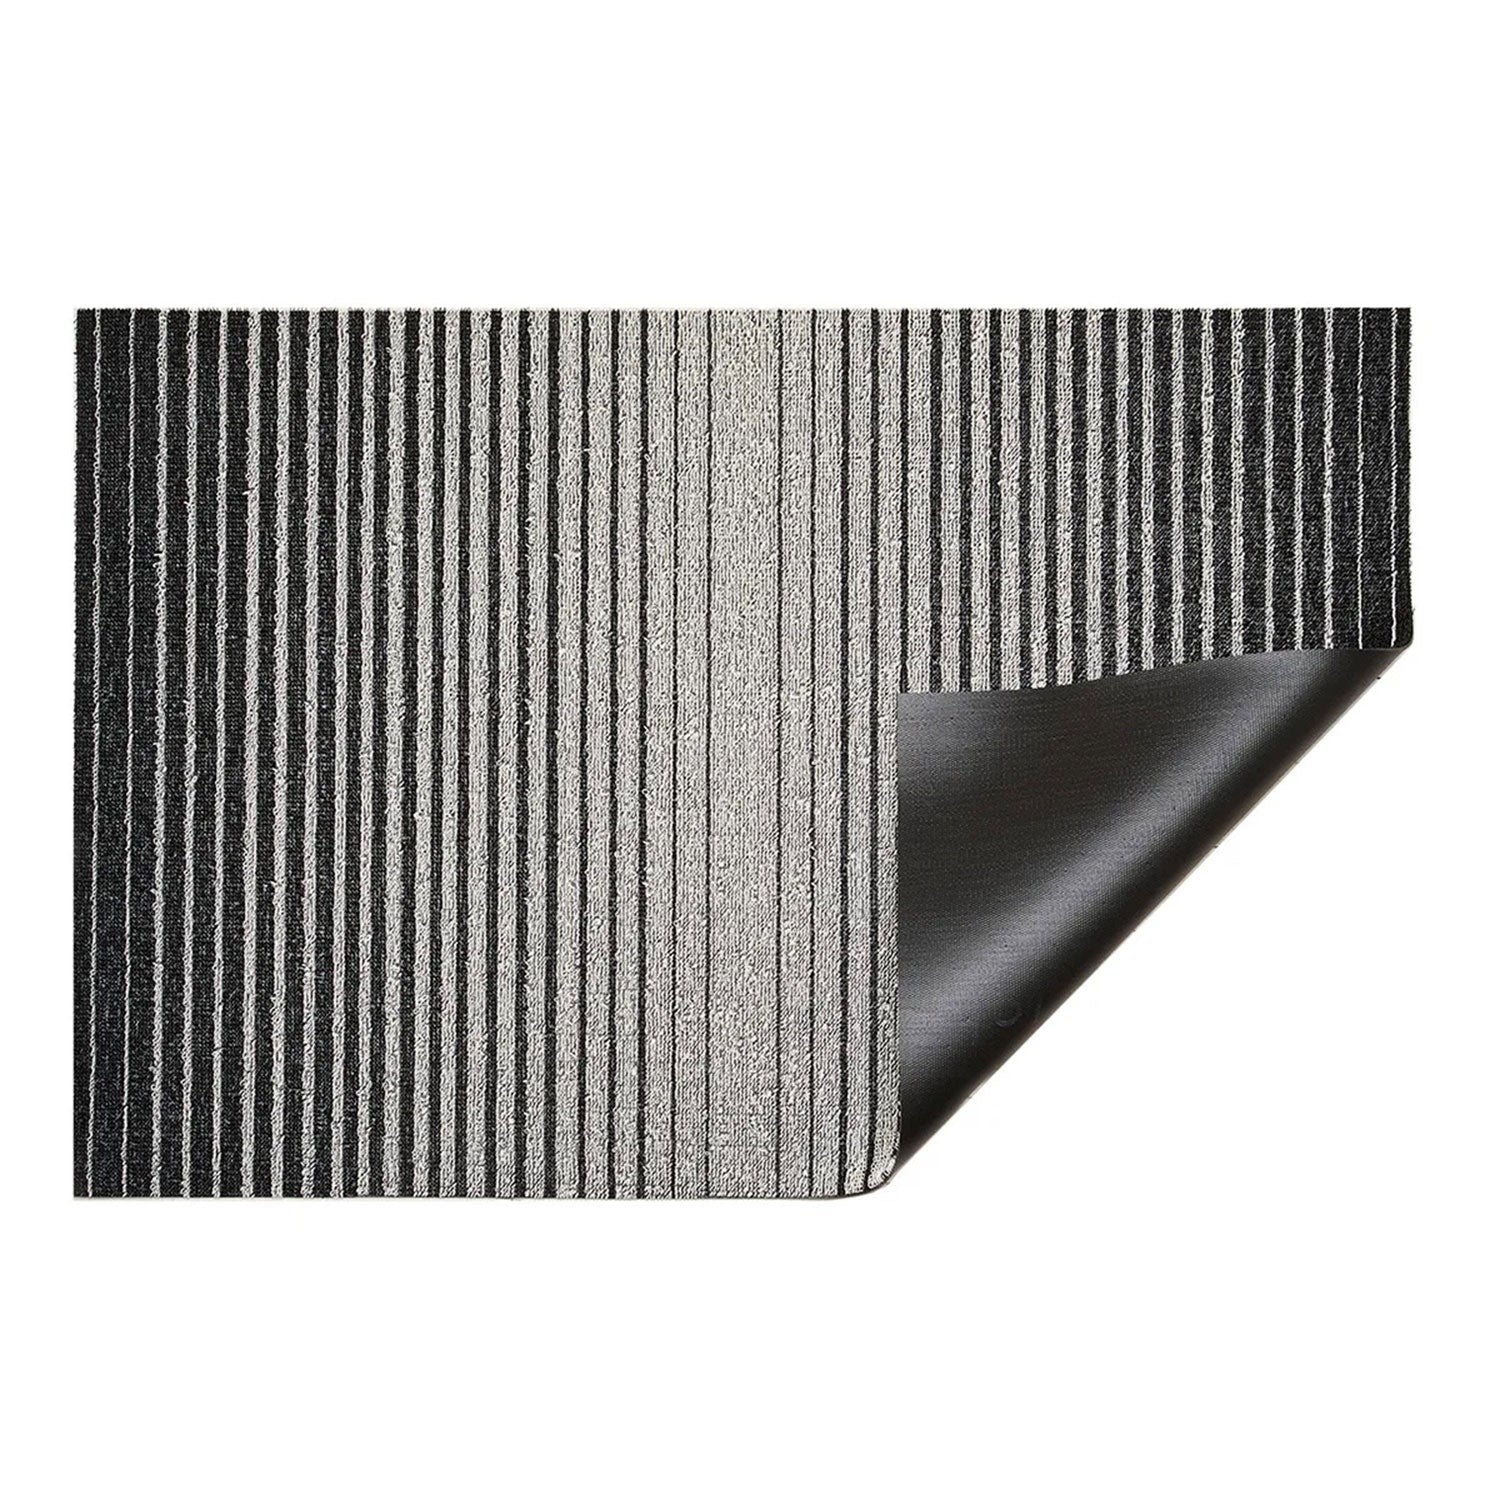 chilewich | large doormat 61x91cm | domino black + white